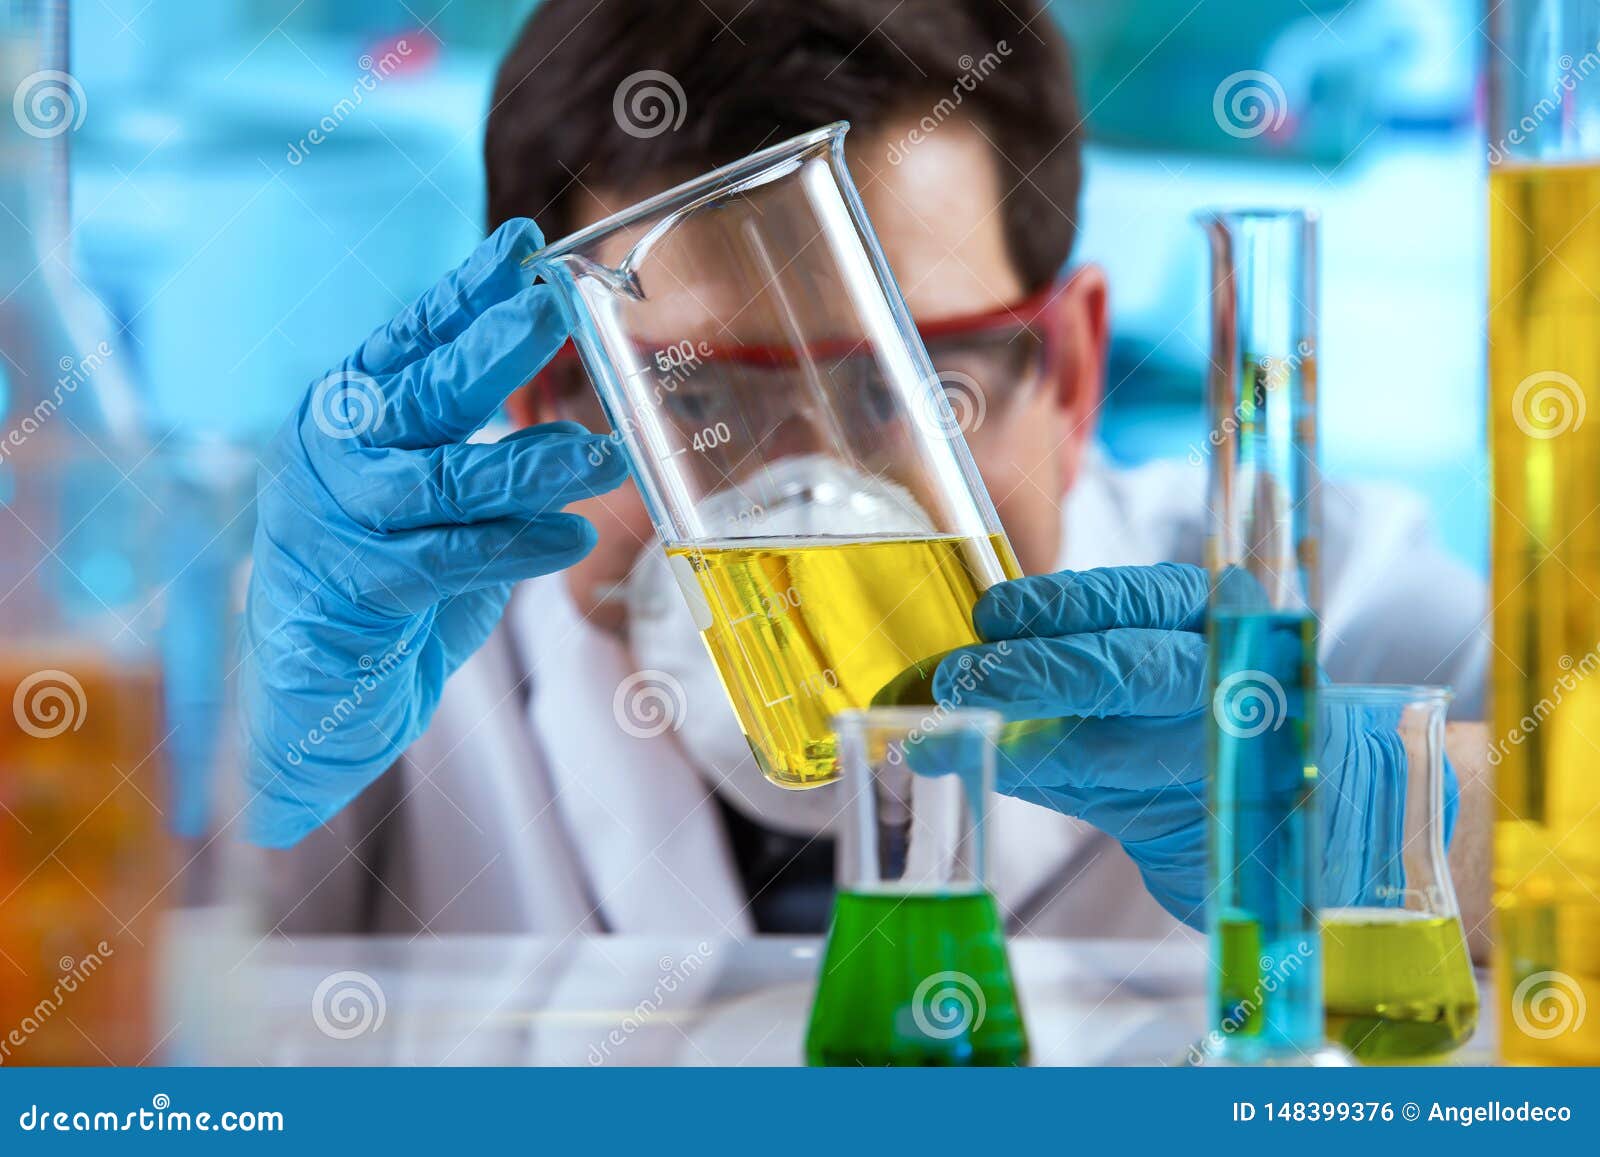 researcher measuring sample in beaker of liquids in the research lab